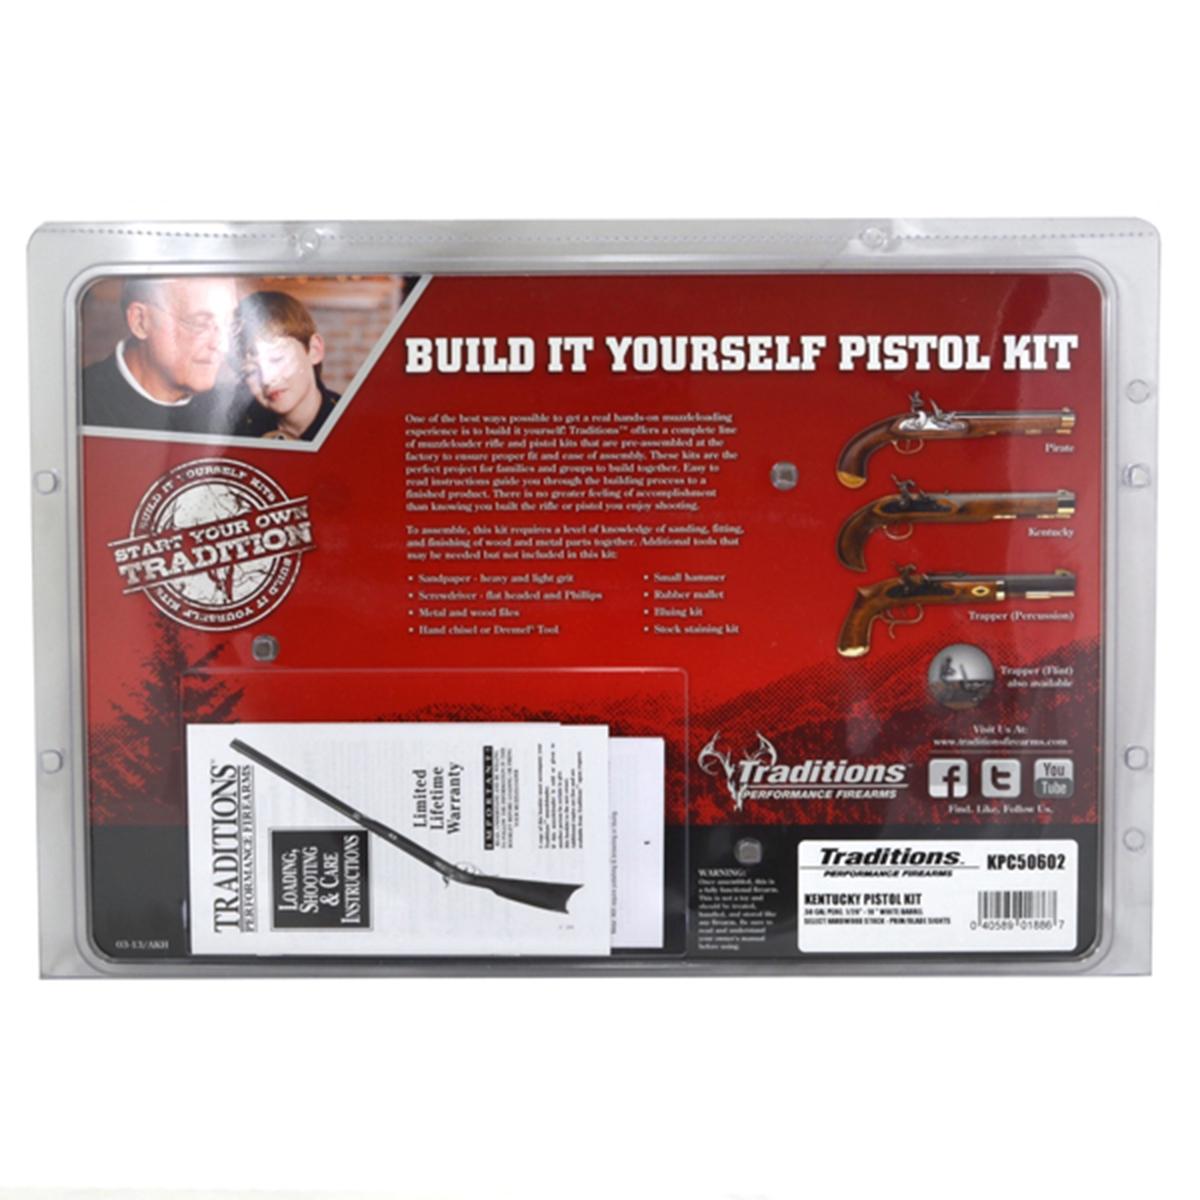 Pistol Kit Kentucky Exquisite New Original Box Papers Traditions .50 Cal (No Gun Sales To NY HI AK.)